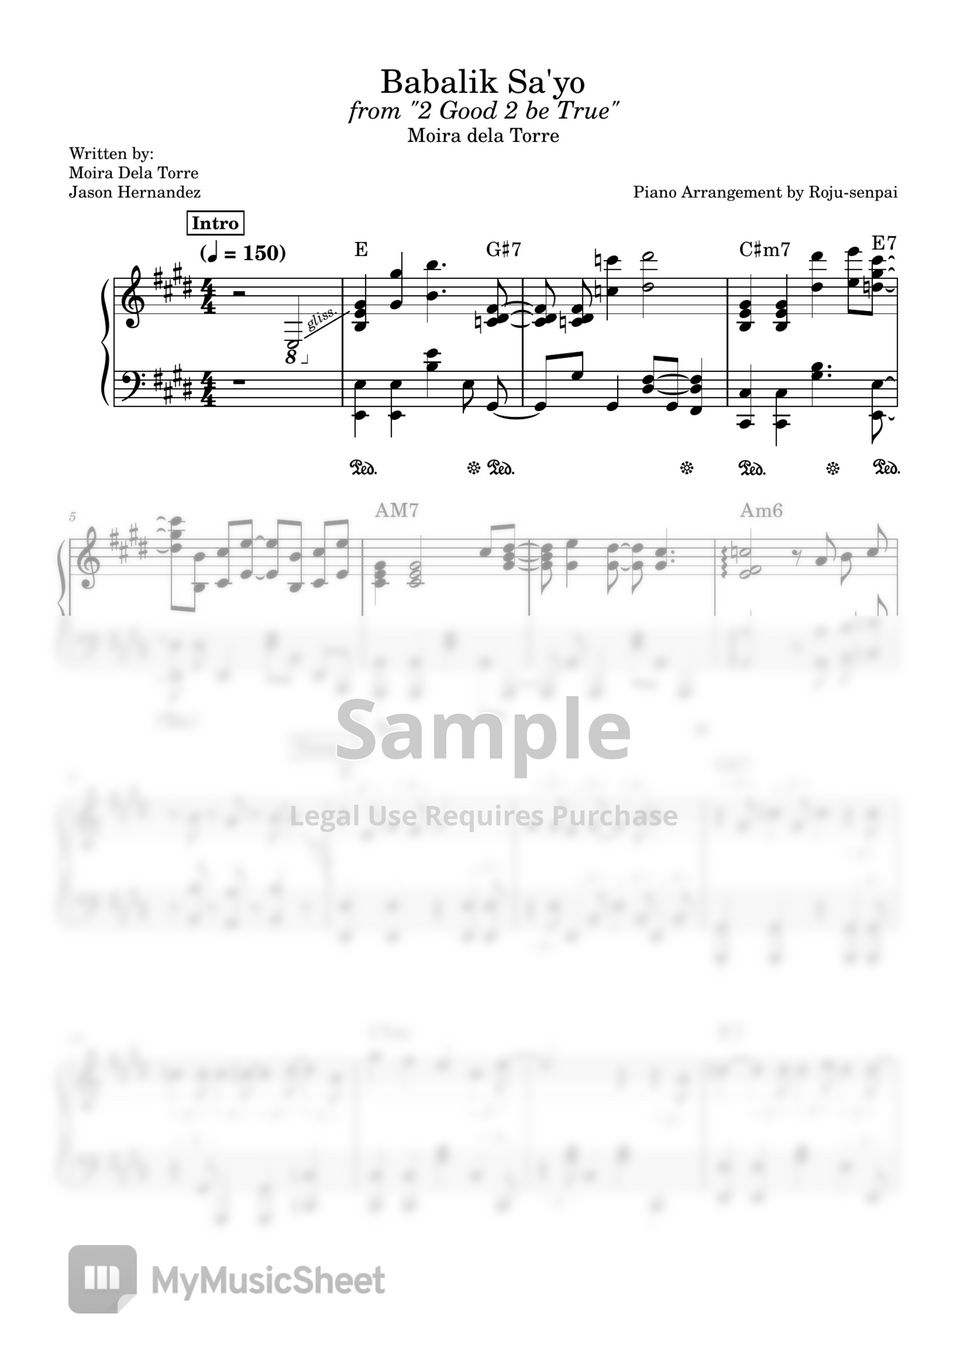 Moira Dela Torre - Babalik Sa'yo (Piano Sheet Music with MIDI & MSCZ) by Roju-senpai